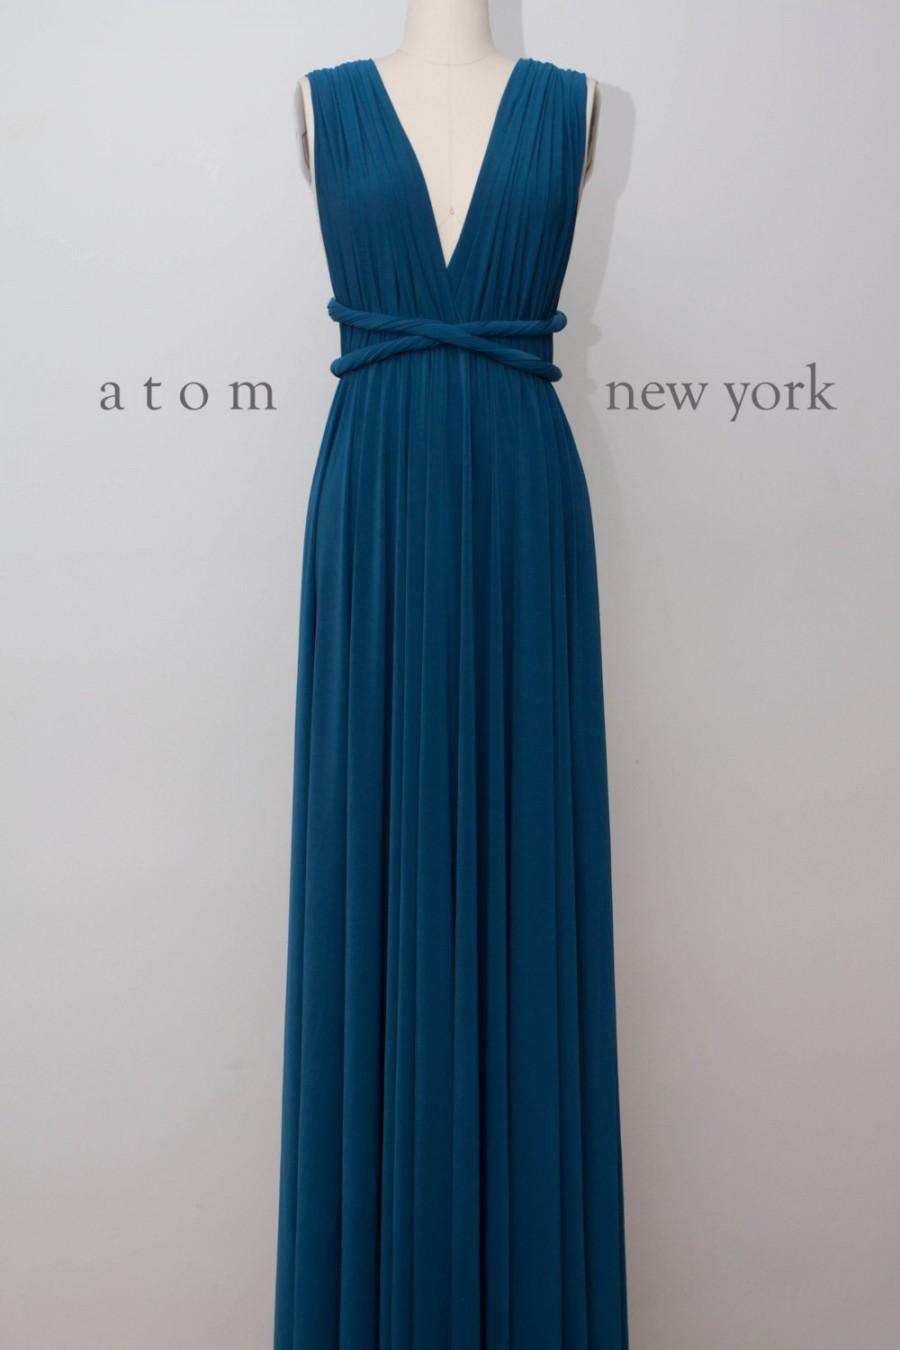 Hochzeit - Teal LONG Floor Length Ball Gown Infinity Dress Convertible Formal Multiway Wrap Dress Bridesmaid Evening Dress